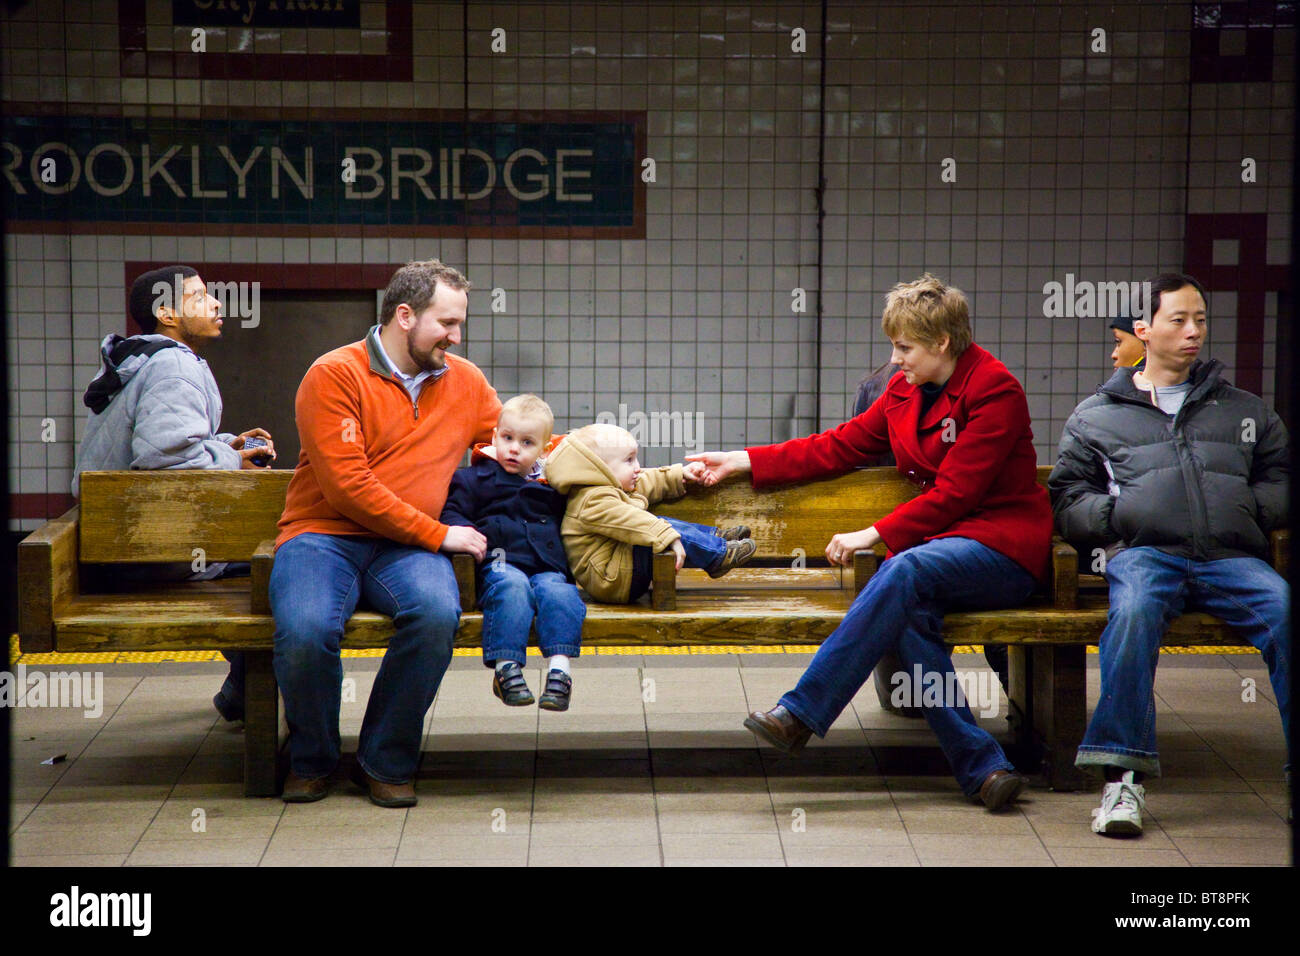 Family waiting at the Brooklyn Bridge subway station, Manhattan, New York Stock Photo